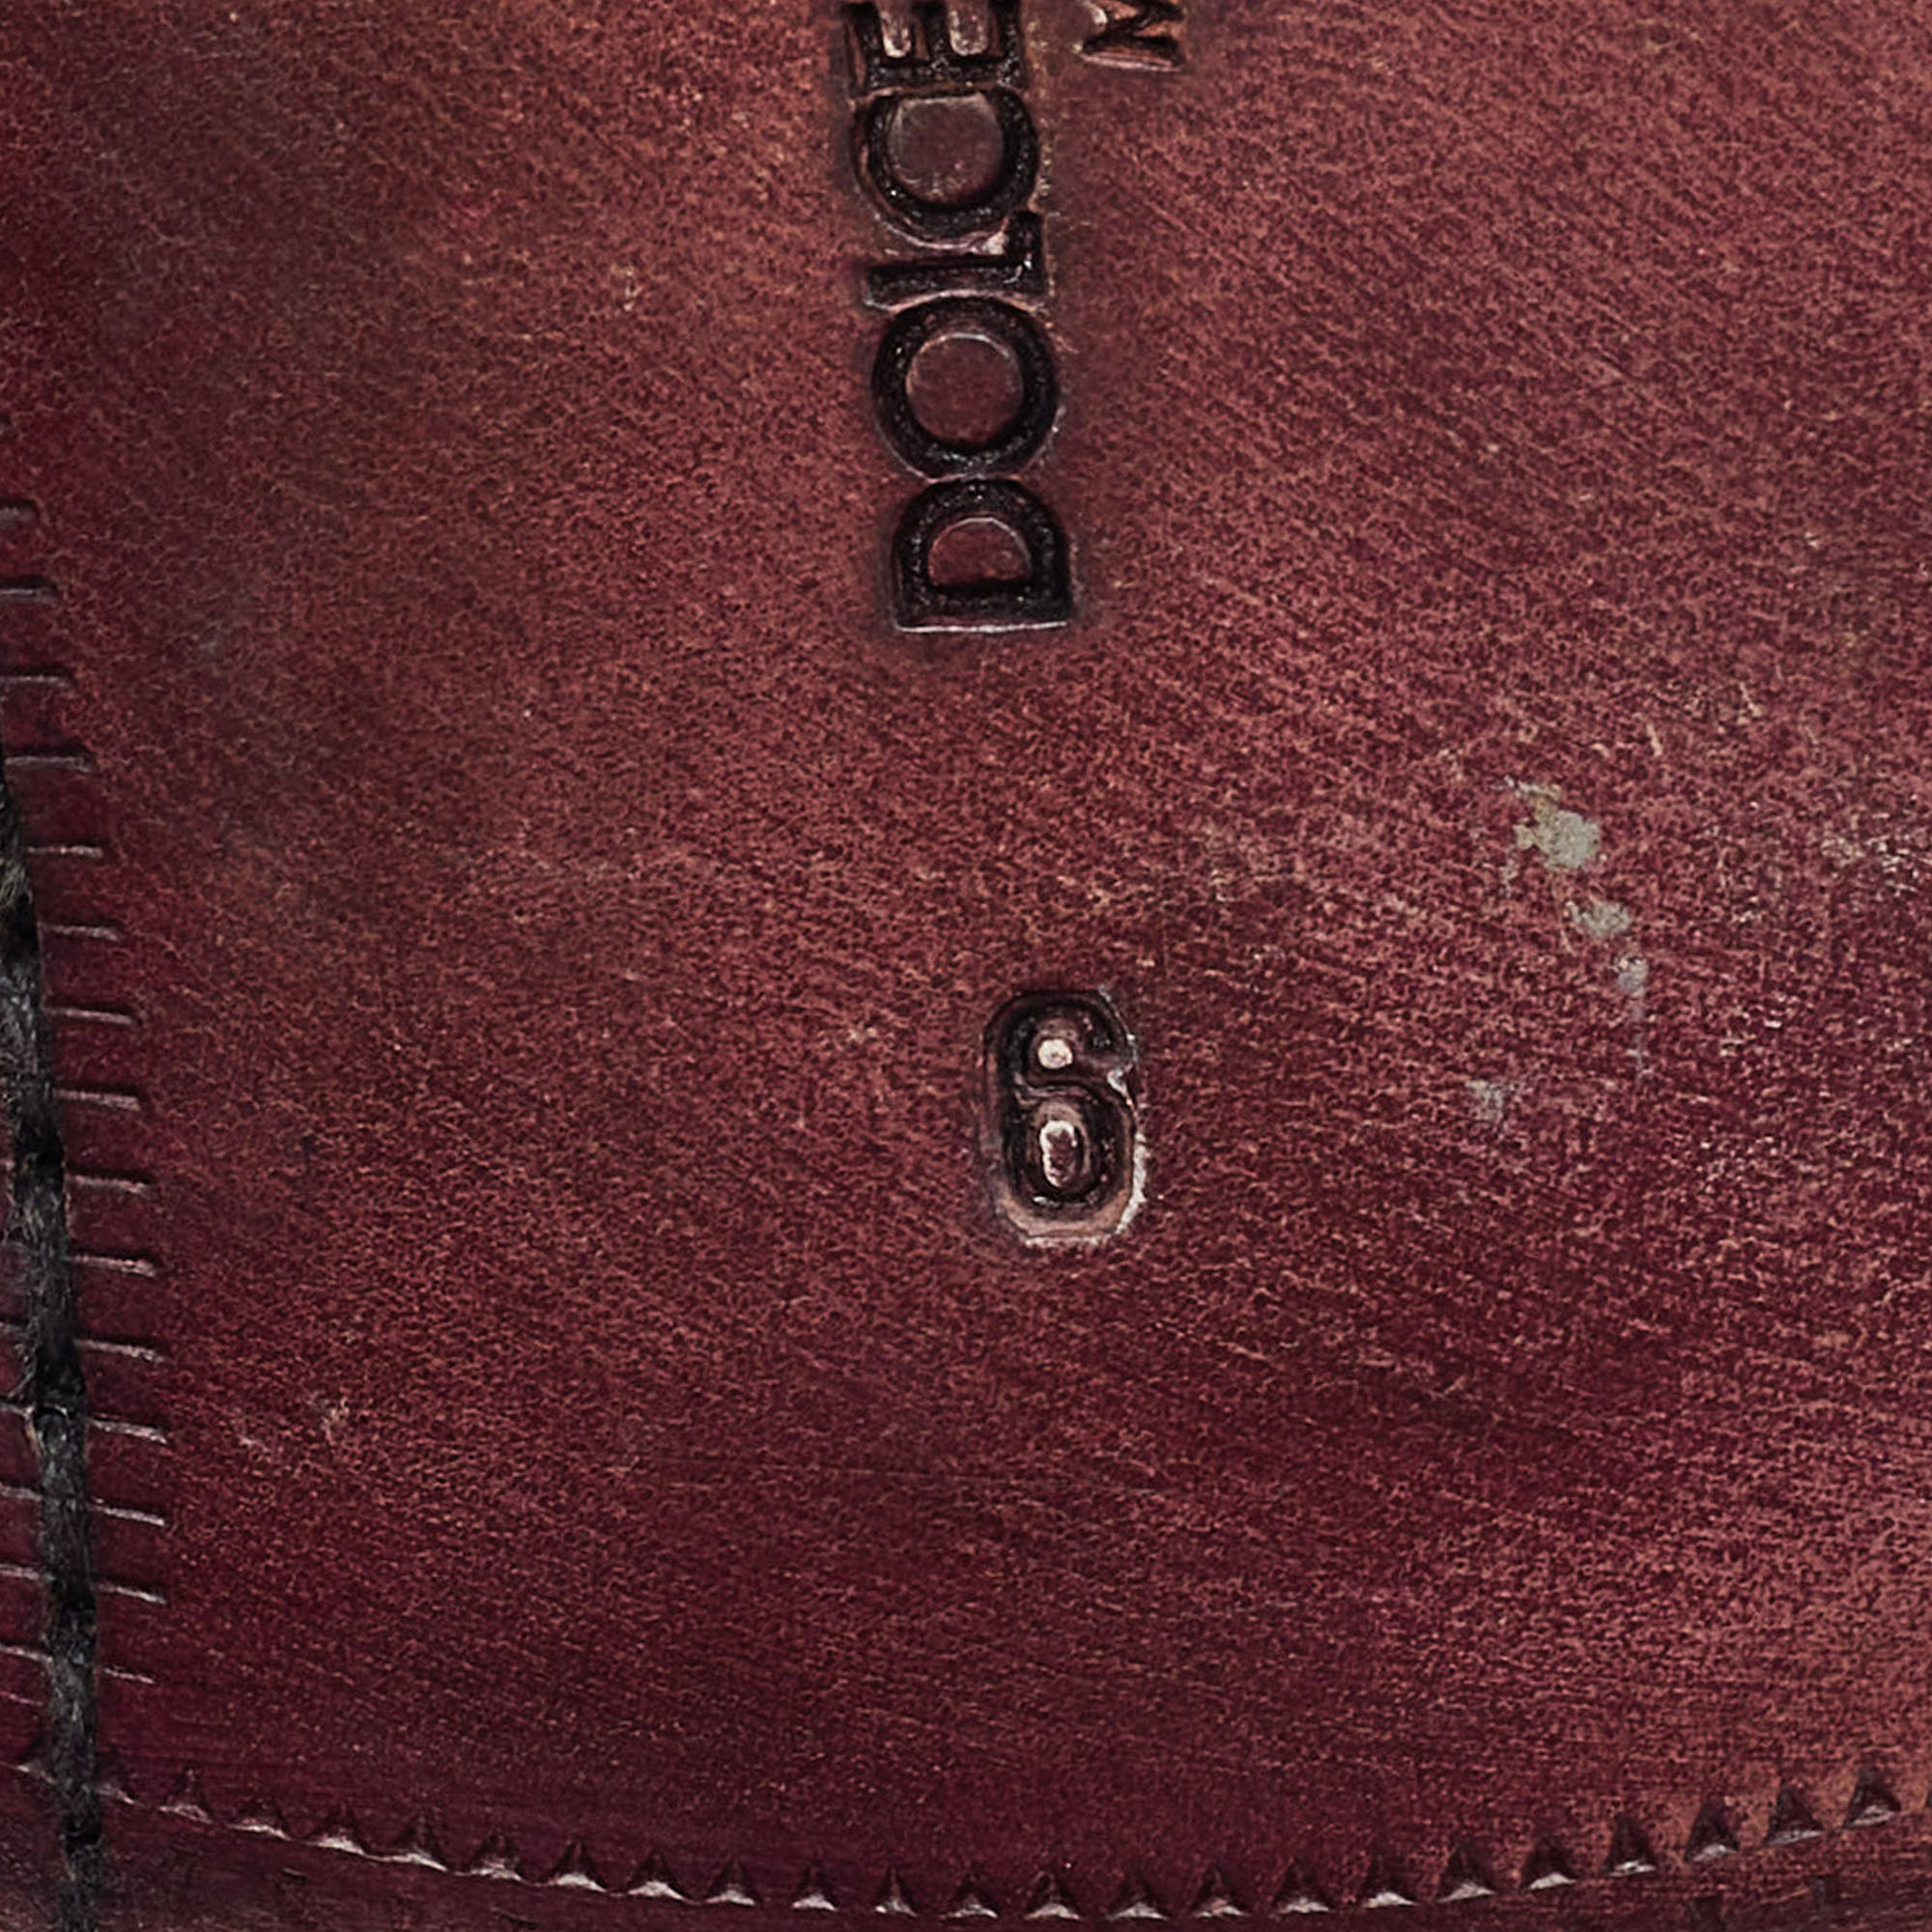 Dolce & Gabbana Black Leather Scrunch Loafers Size 39